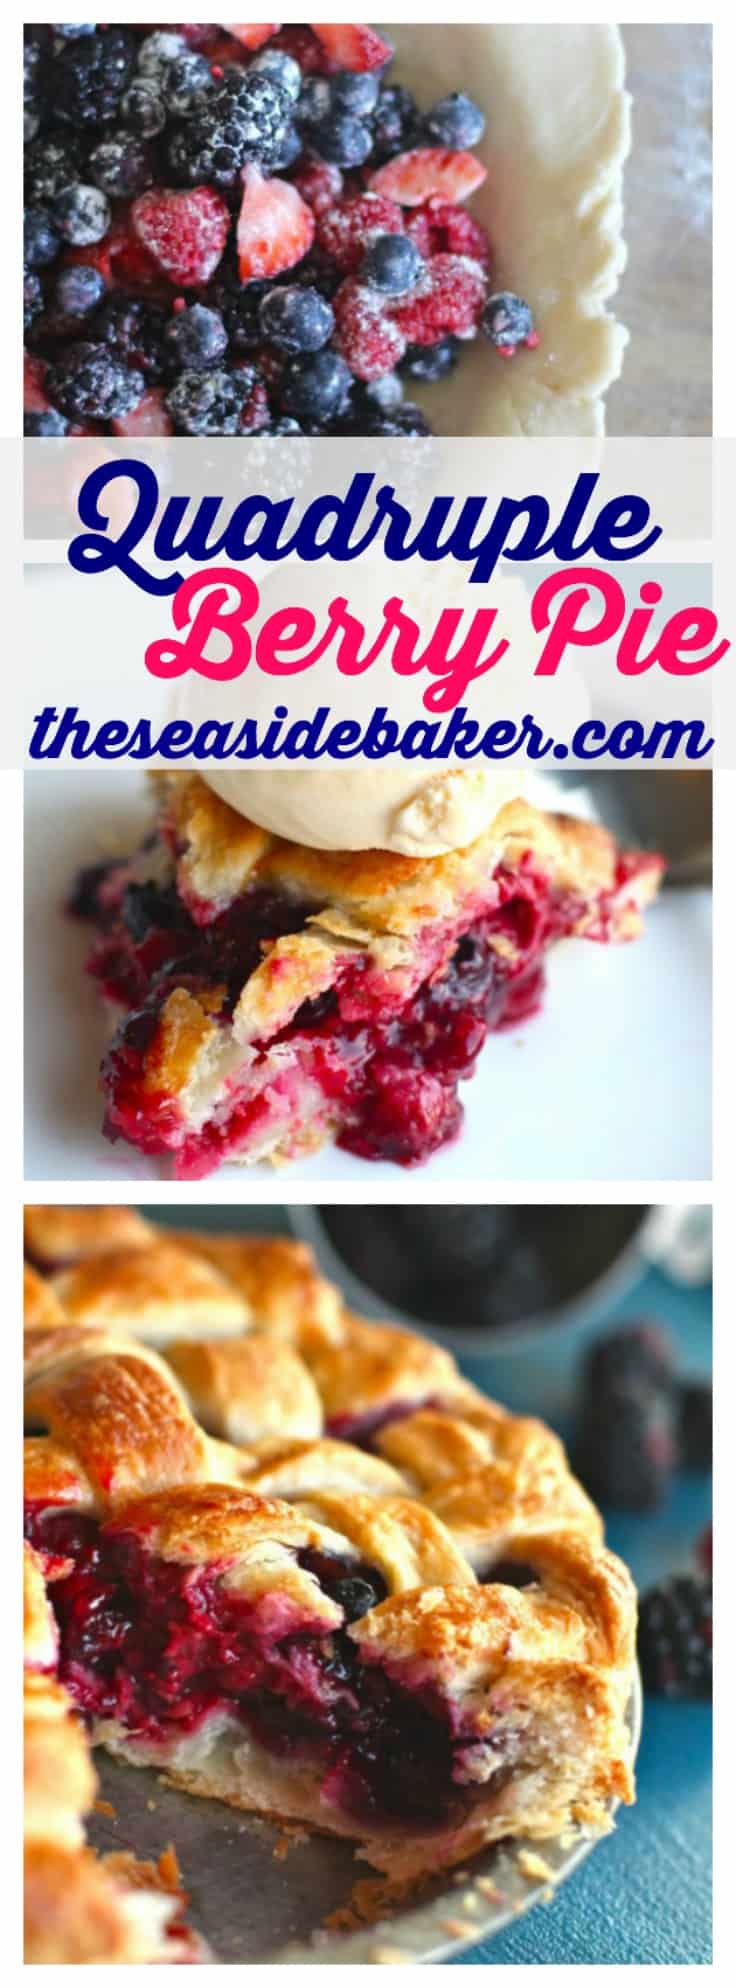 Summer berry pie filled with strawberries, blackberries, raspberries and blueberries